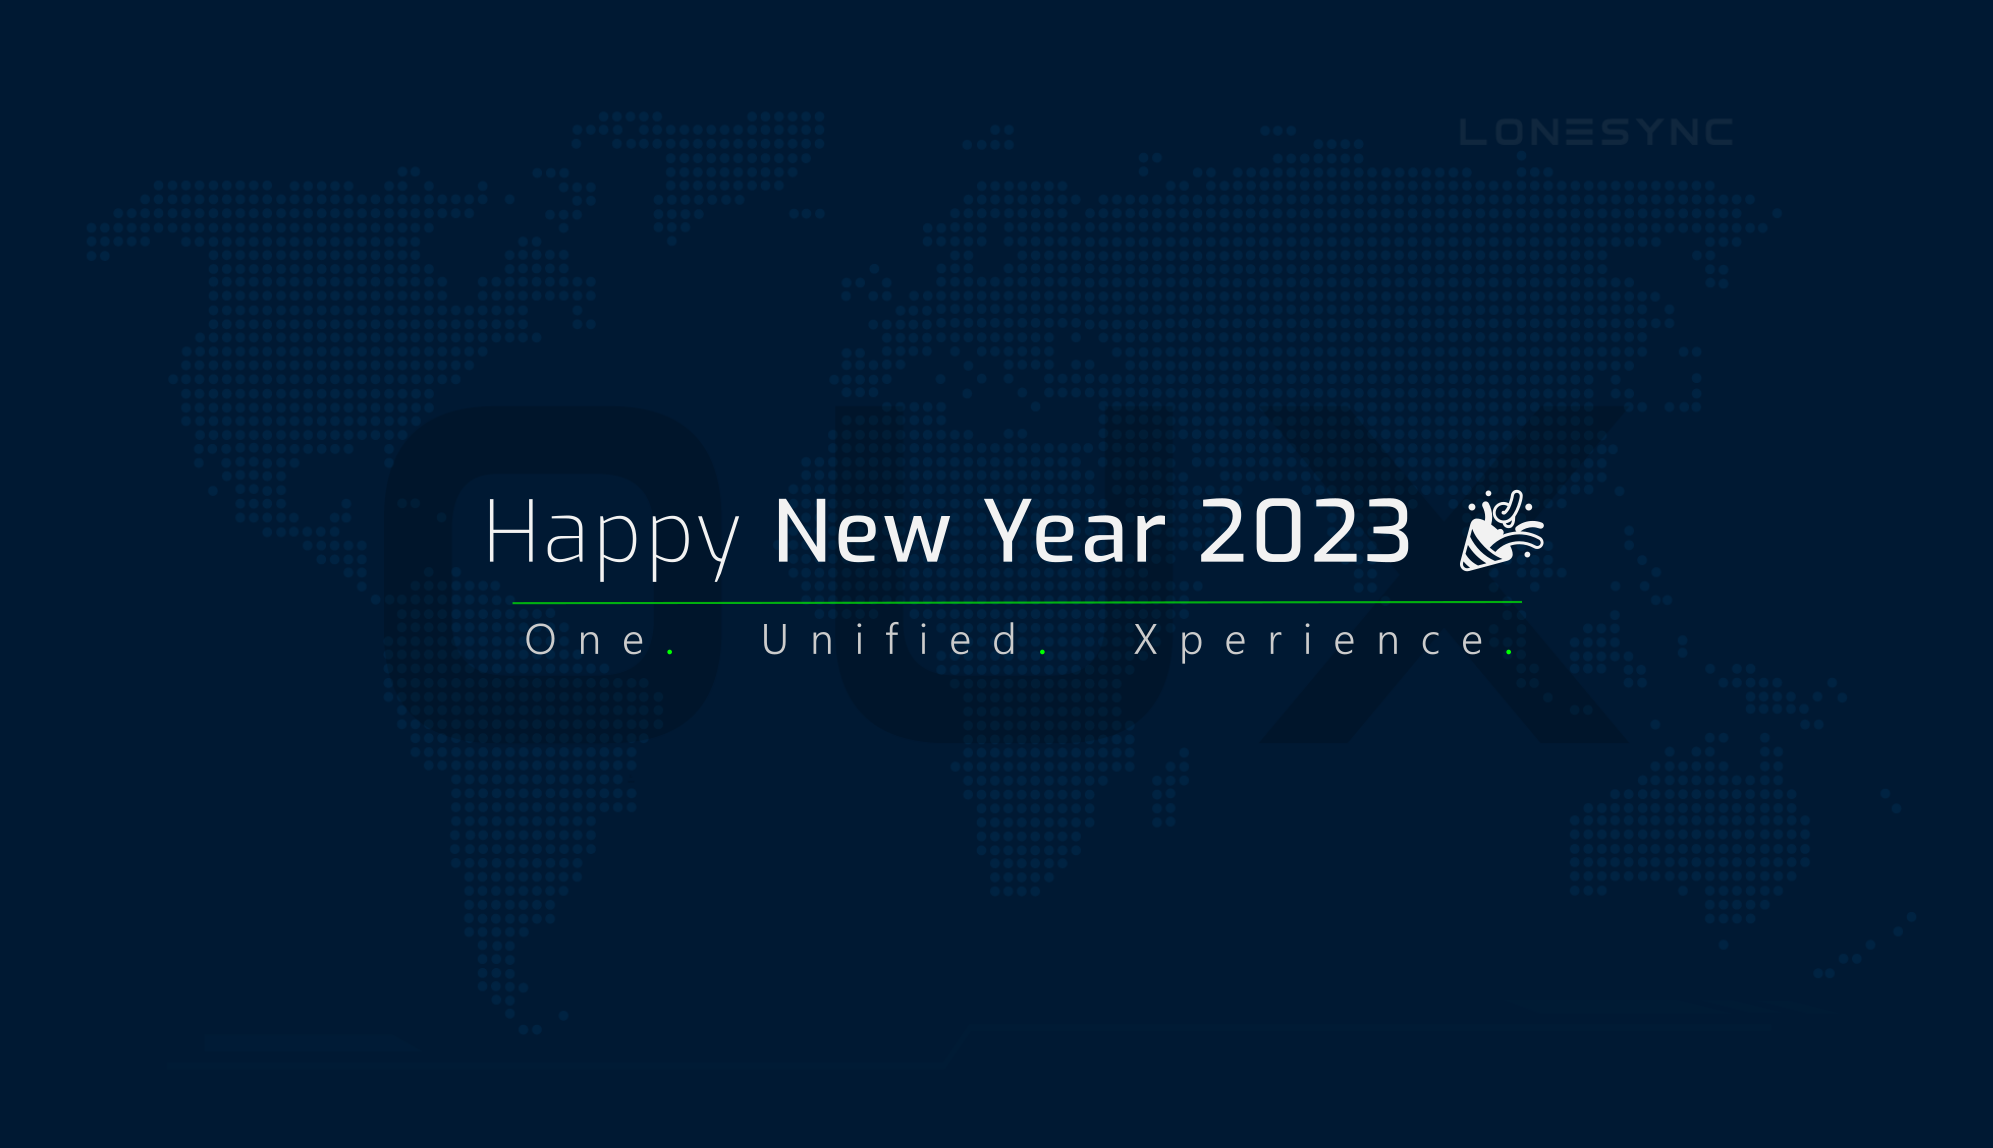 Happy New Year 2023 by LoneSync